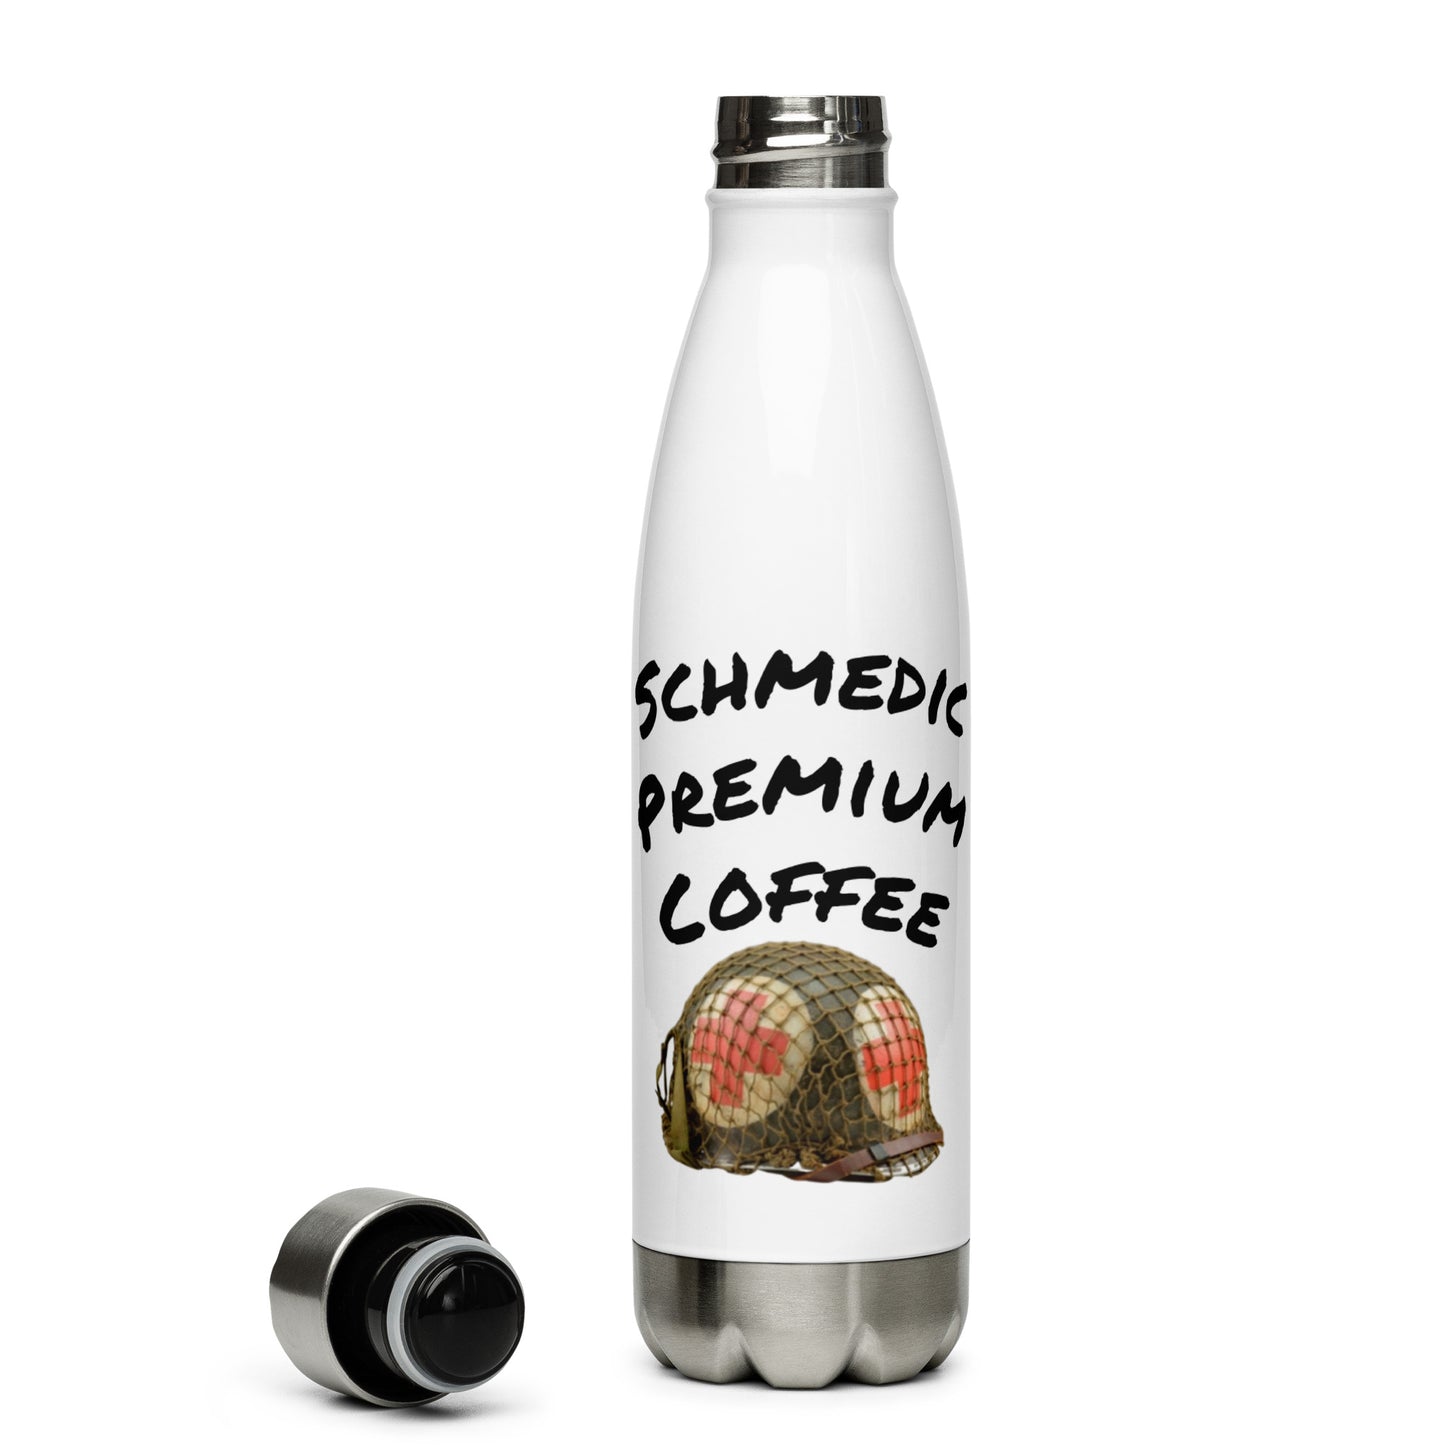 Schmedic Premium Coffee Water Bottle